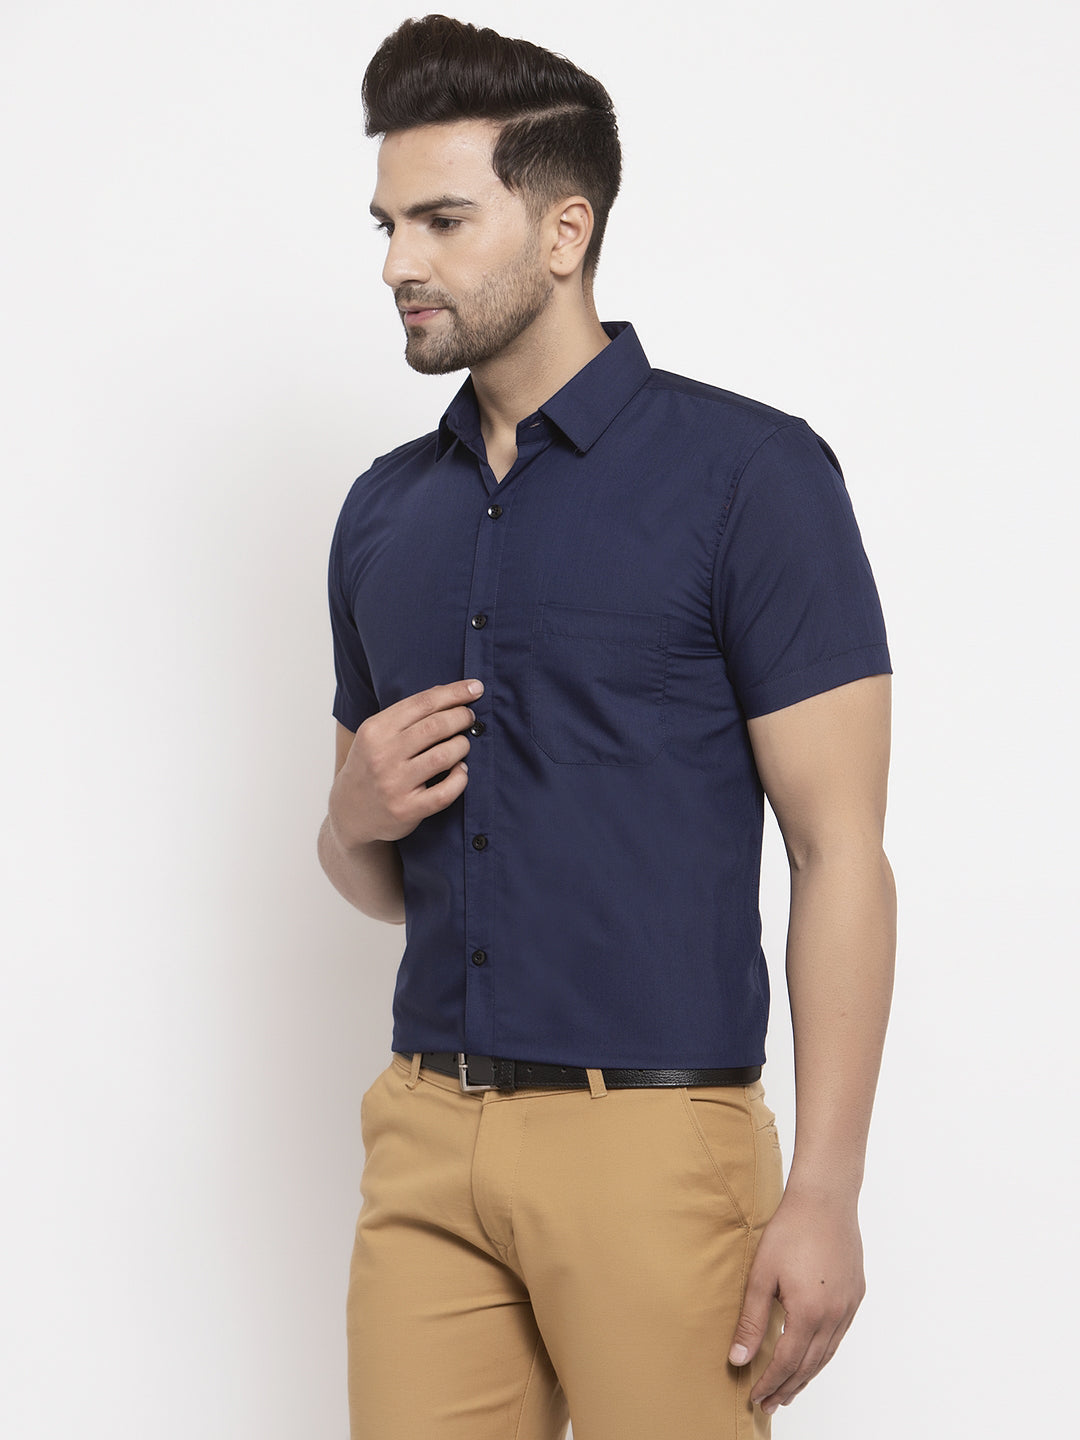 Men's Navy Cotton Half Sleeves Solid Formal Shirts ( SF 754Navy ) - Jainish